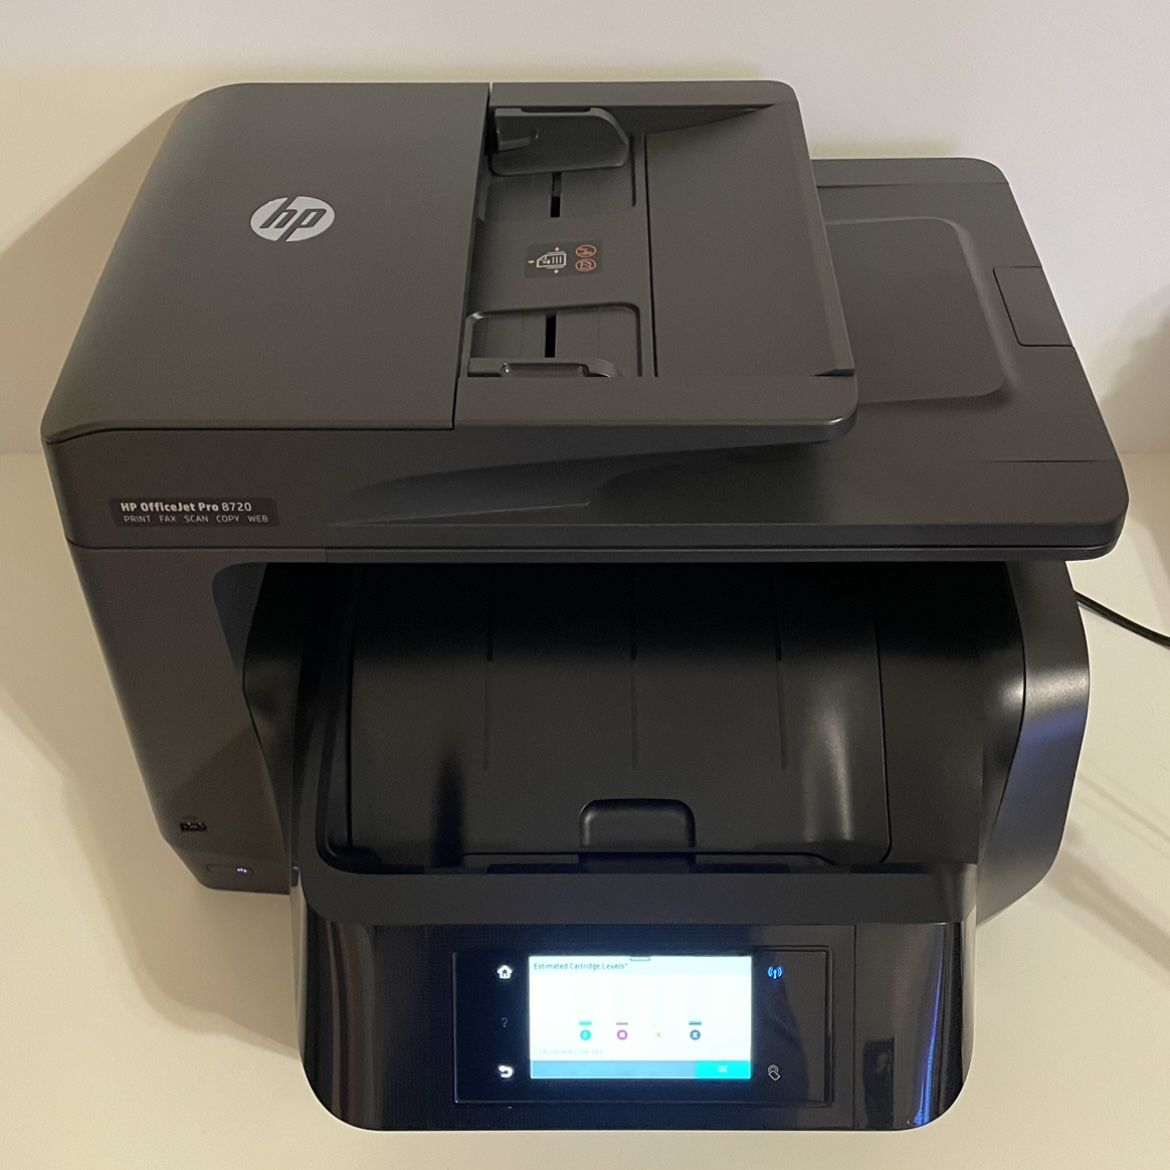 HP OfficeJet Pro 8720 for Sale in Toledo, OH - OfferUp